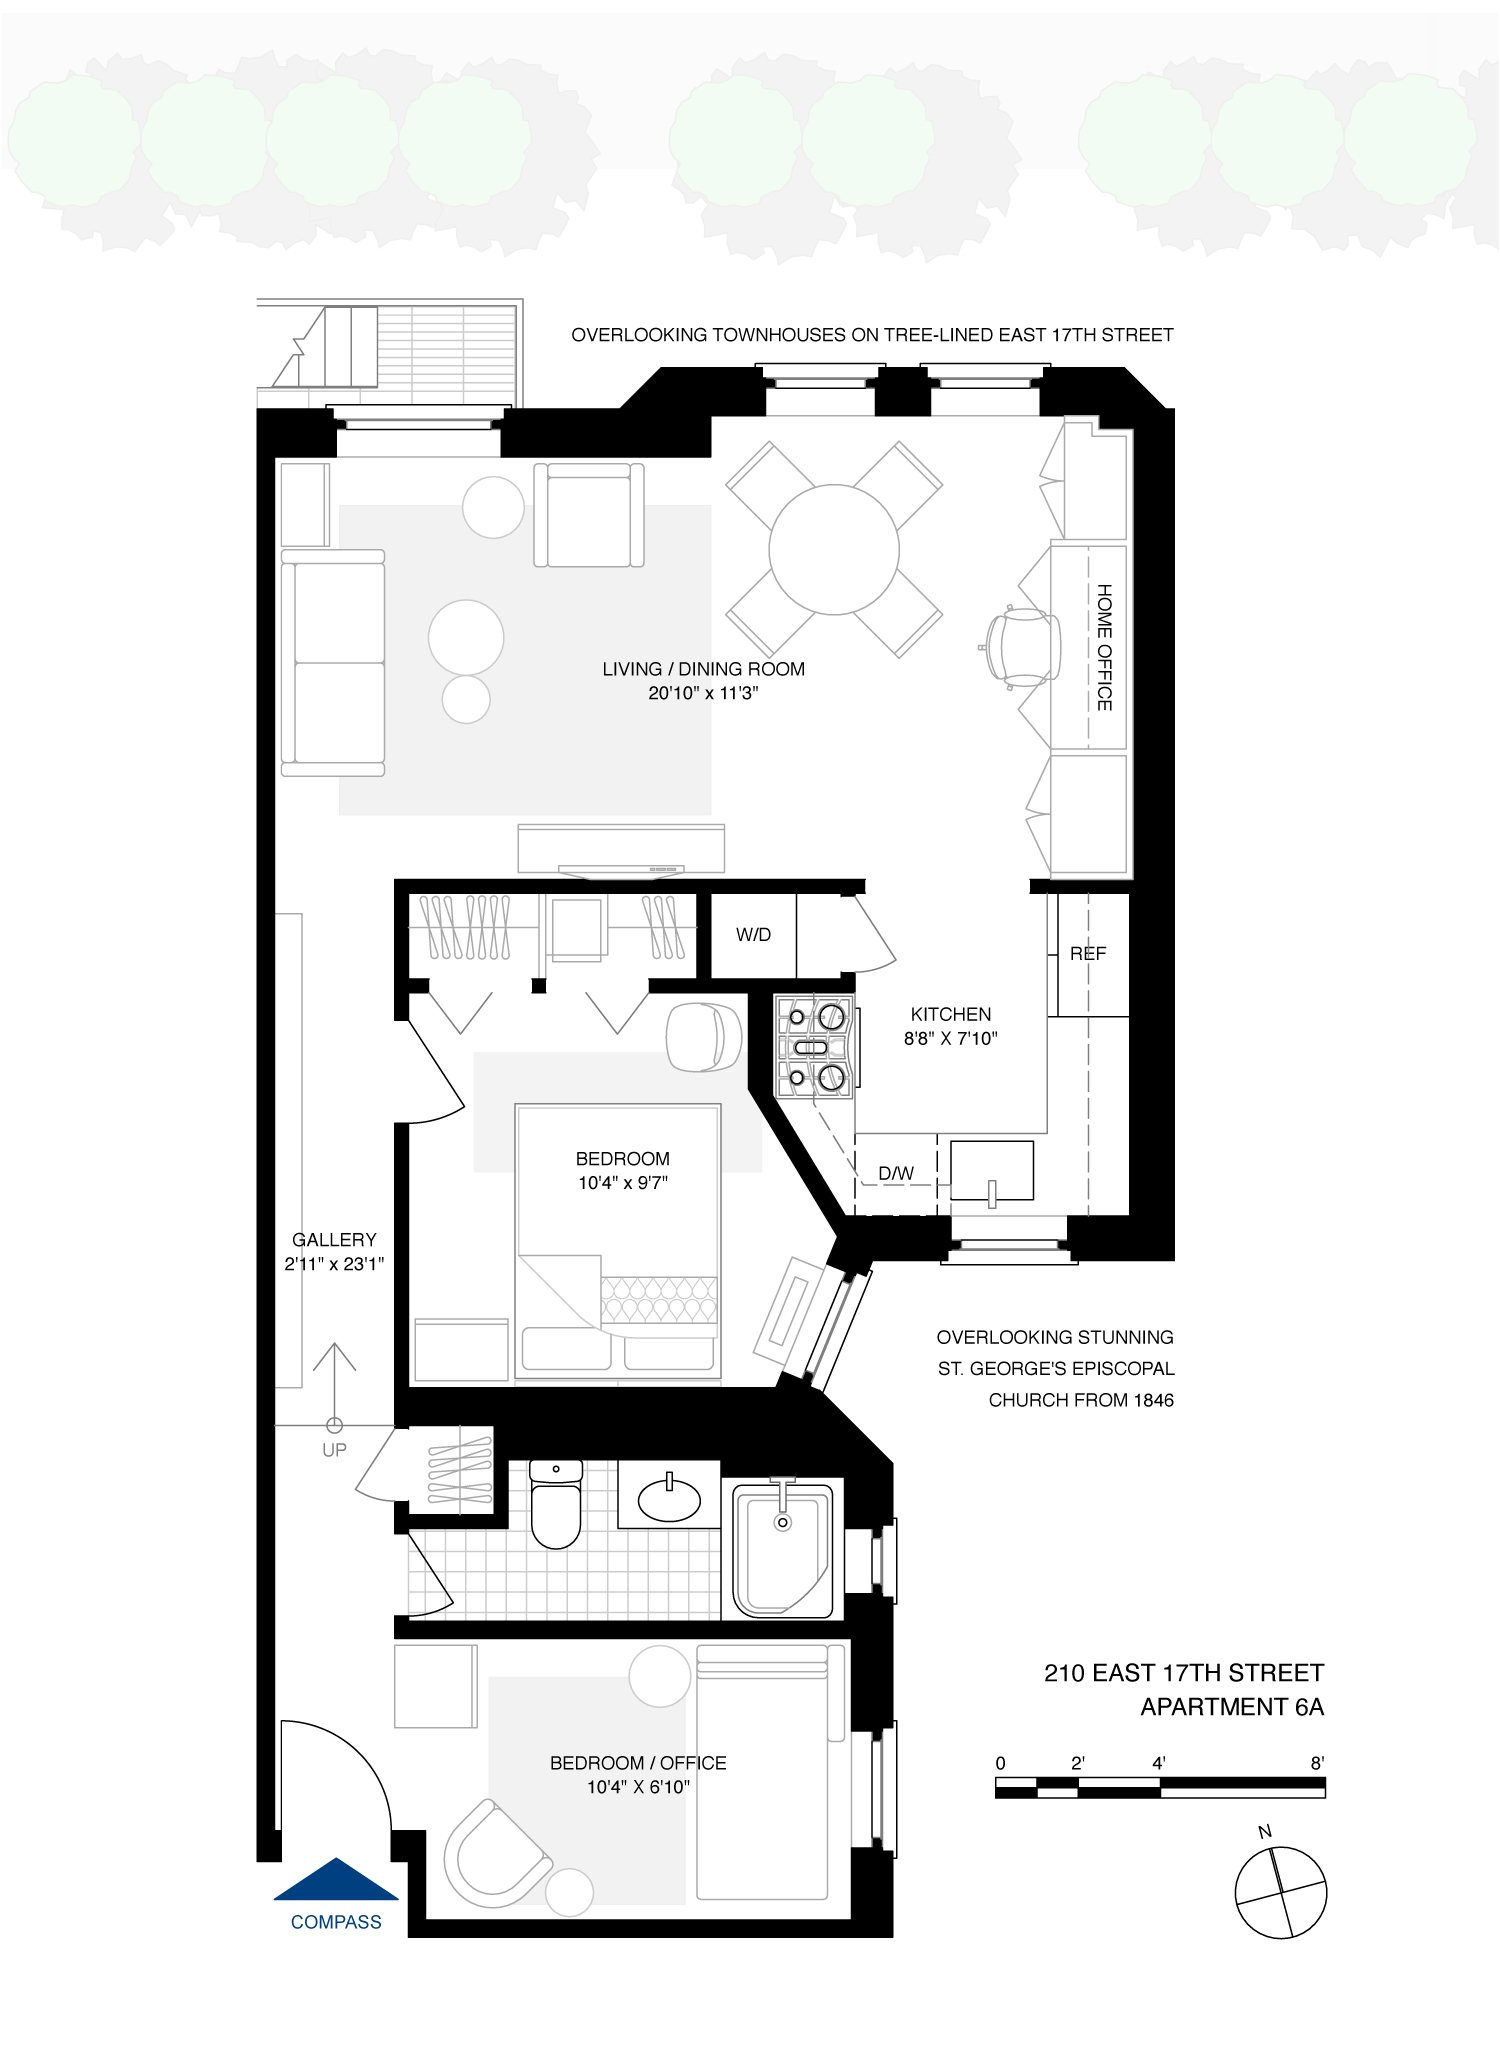 Floorplan for 210 East 17th Street, 6A